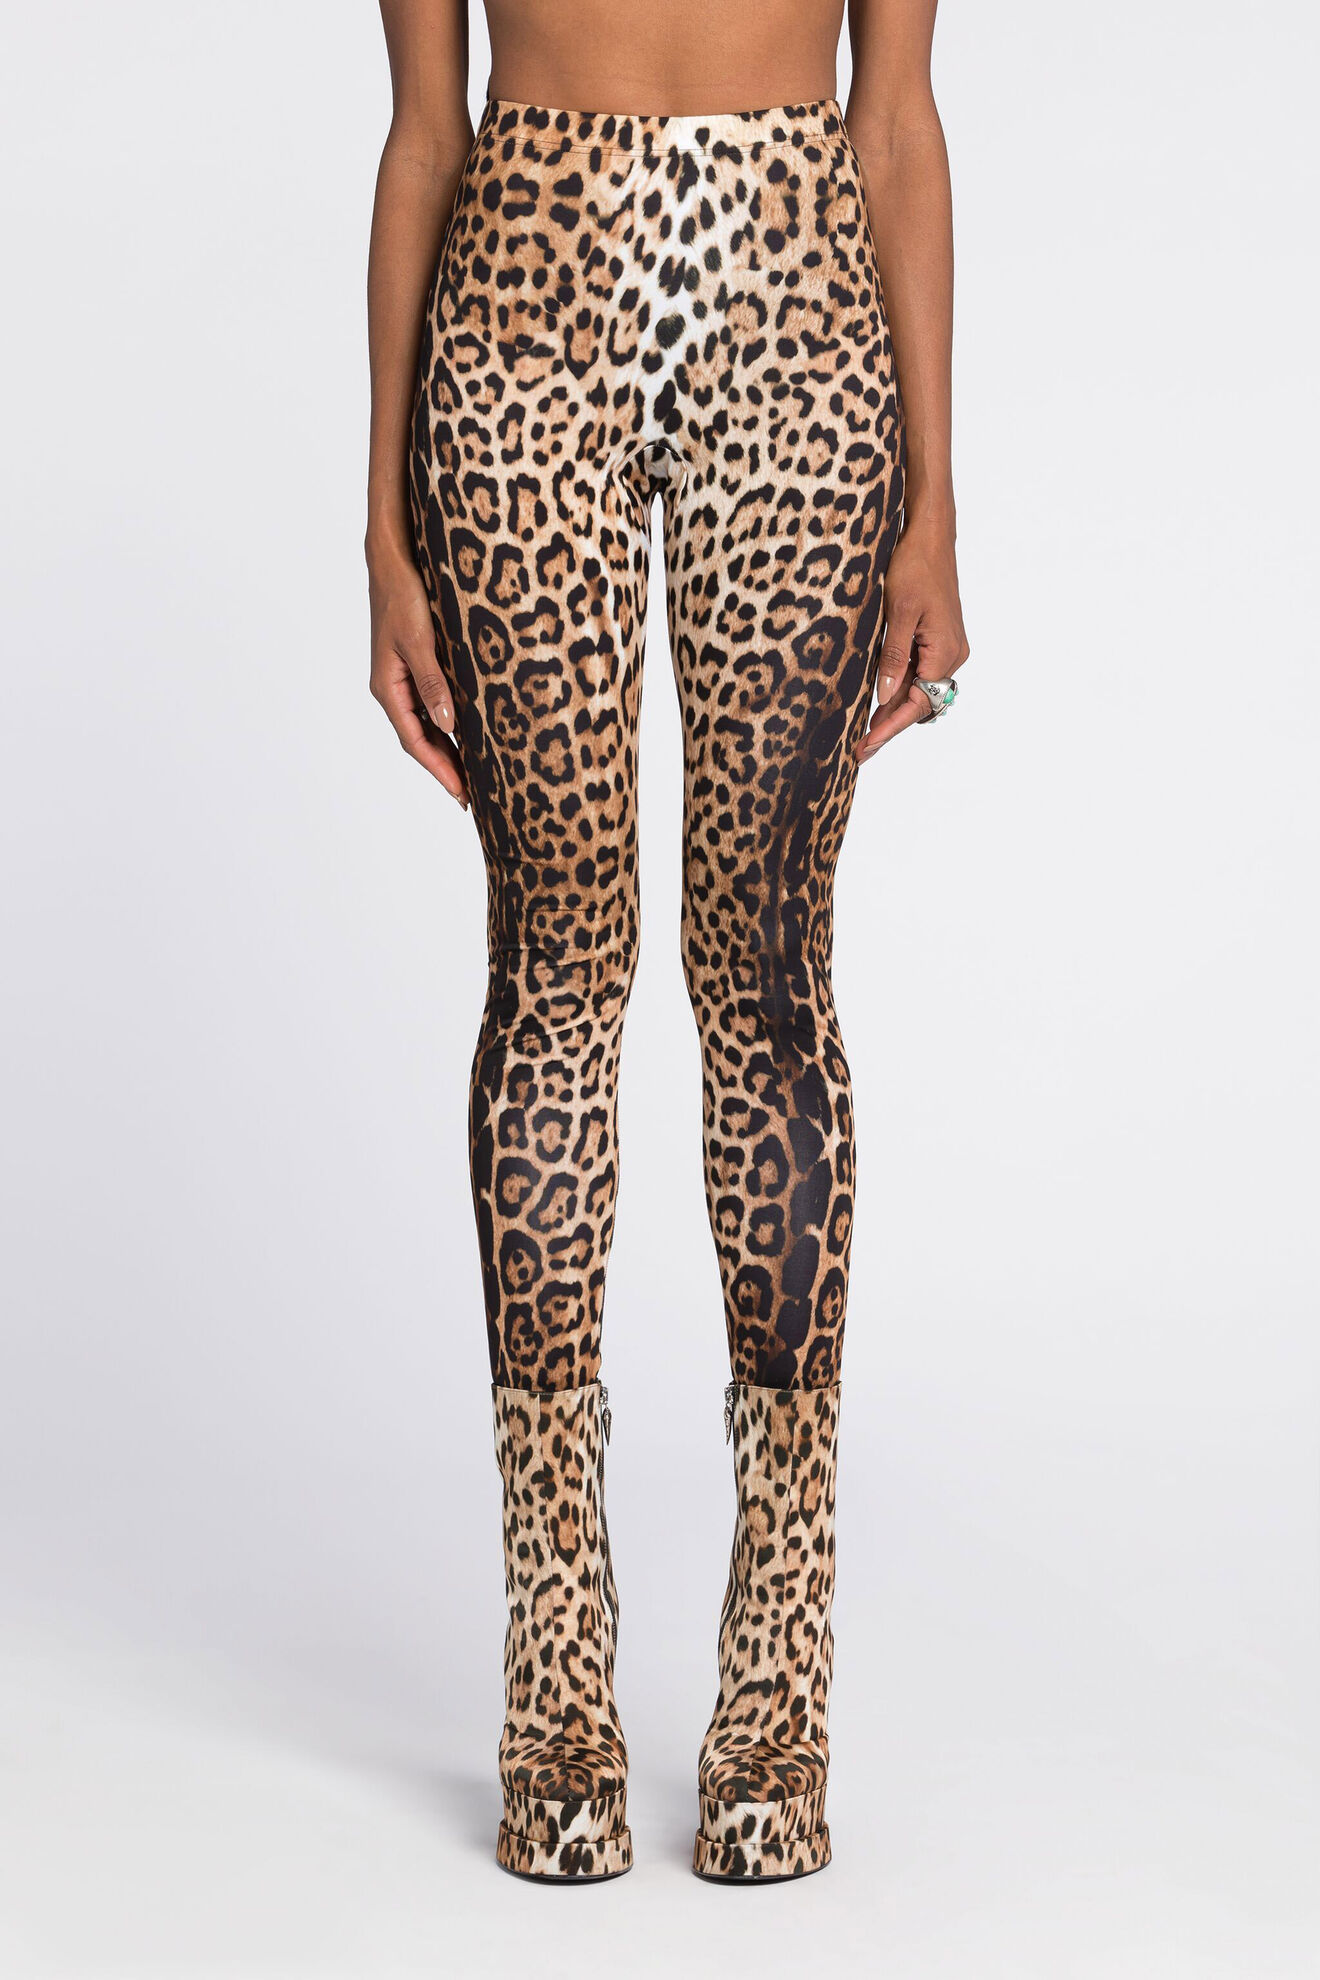 Z by Zelle Womens Capri Leggings Cheetah Animal Print Gray Size Medium